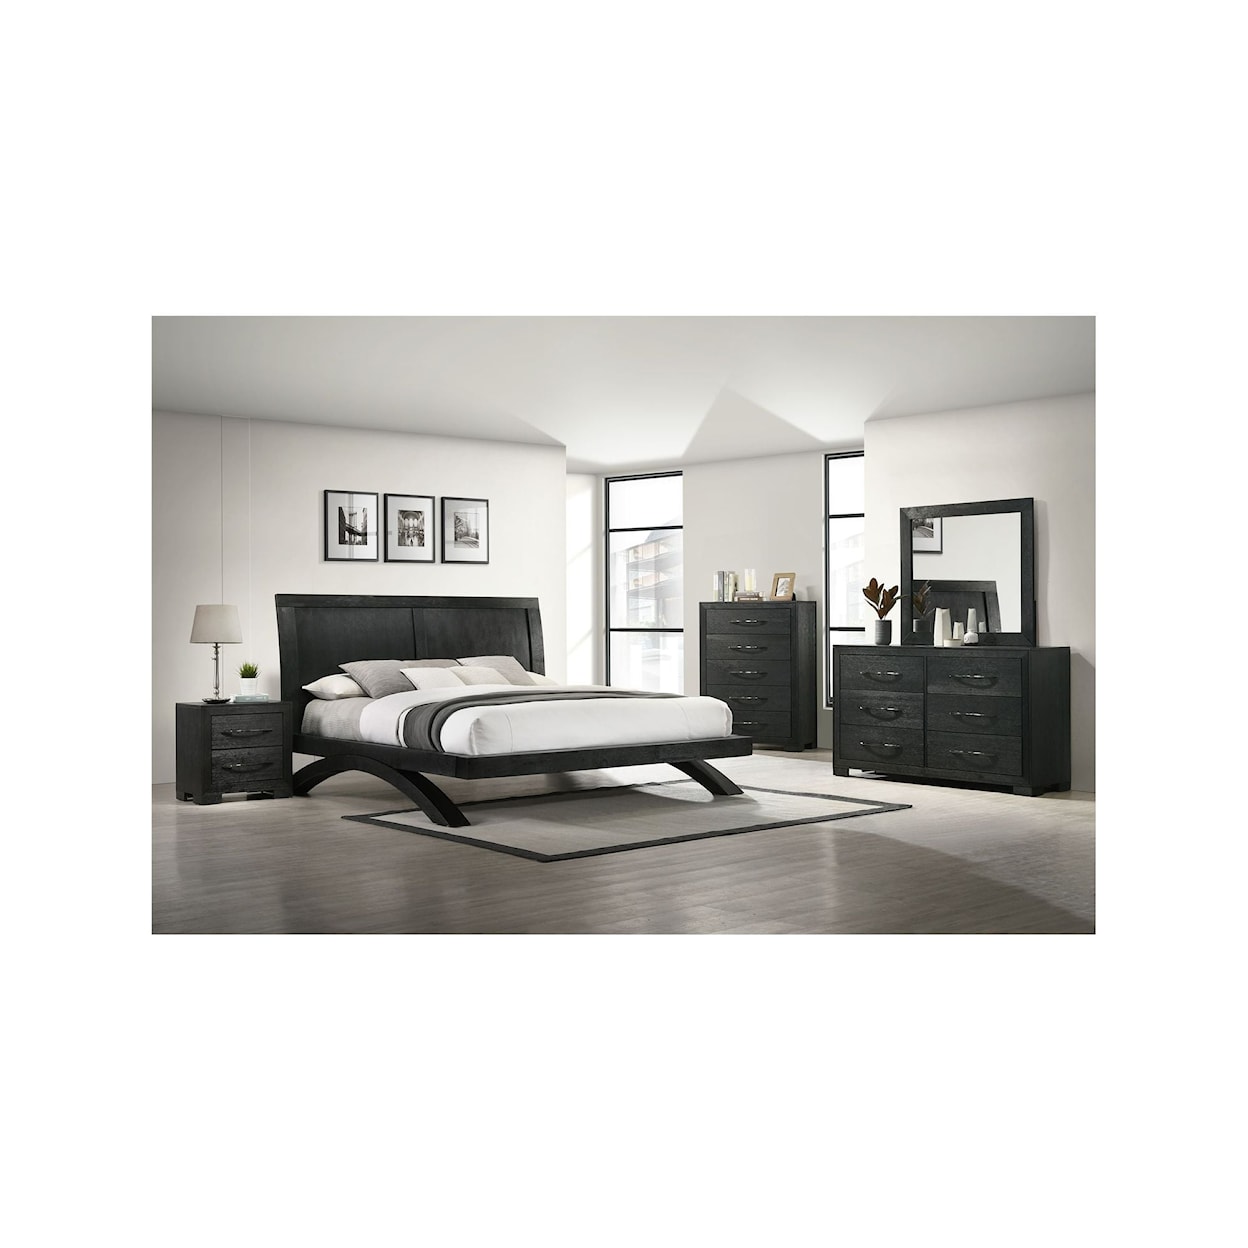 Elements International Allan King Panel 3Pc Bedroom Set In Black